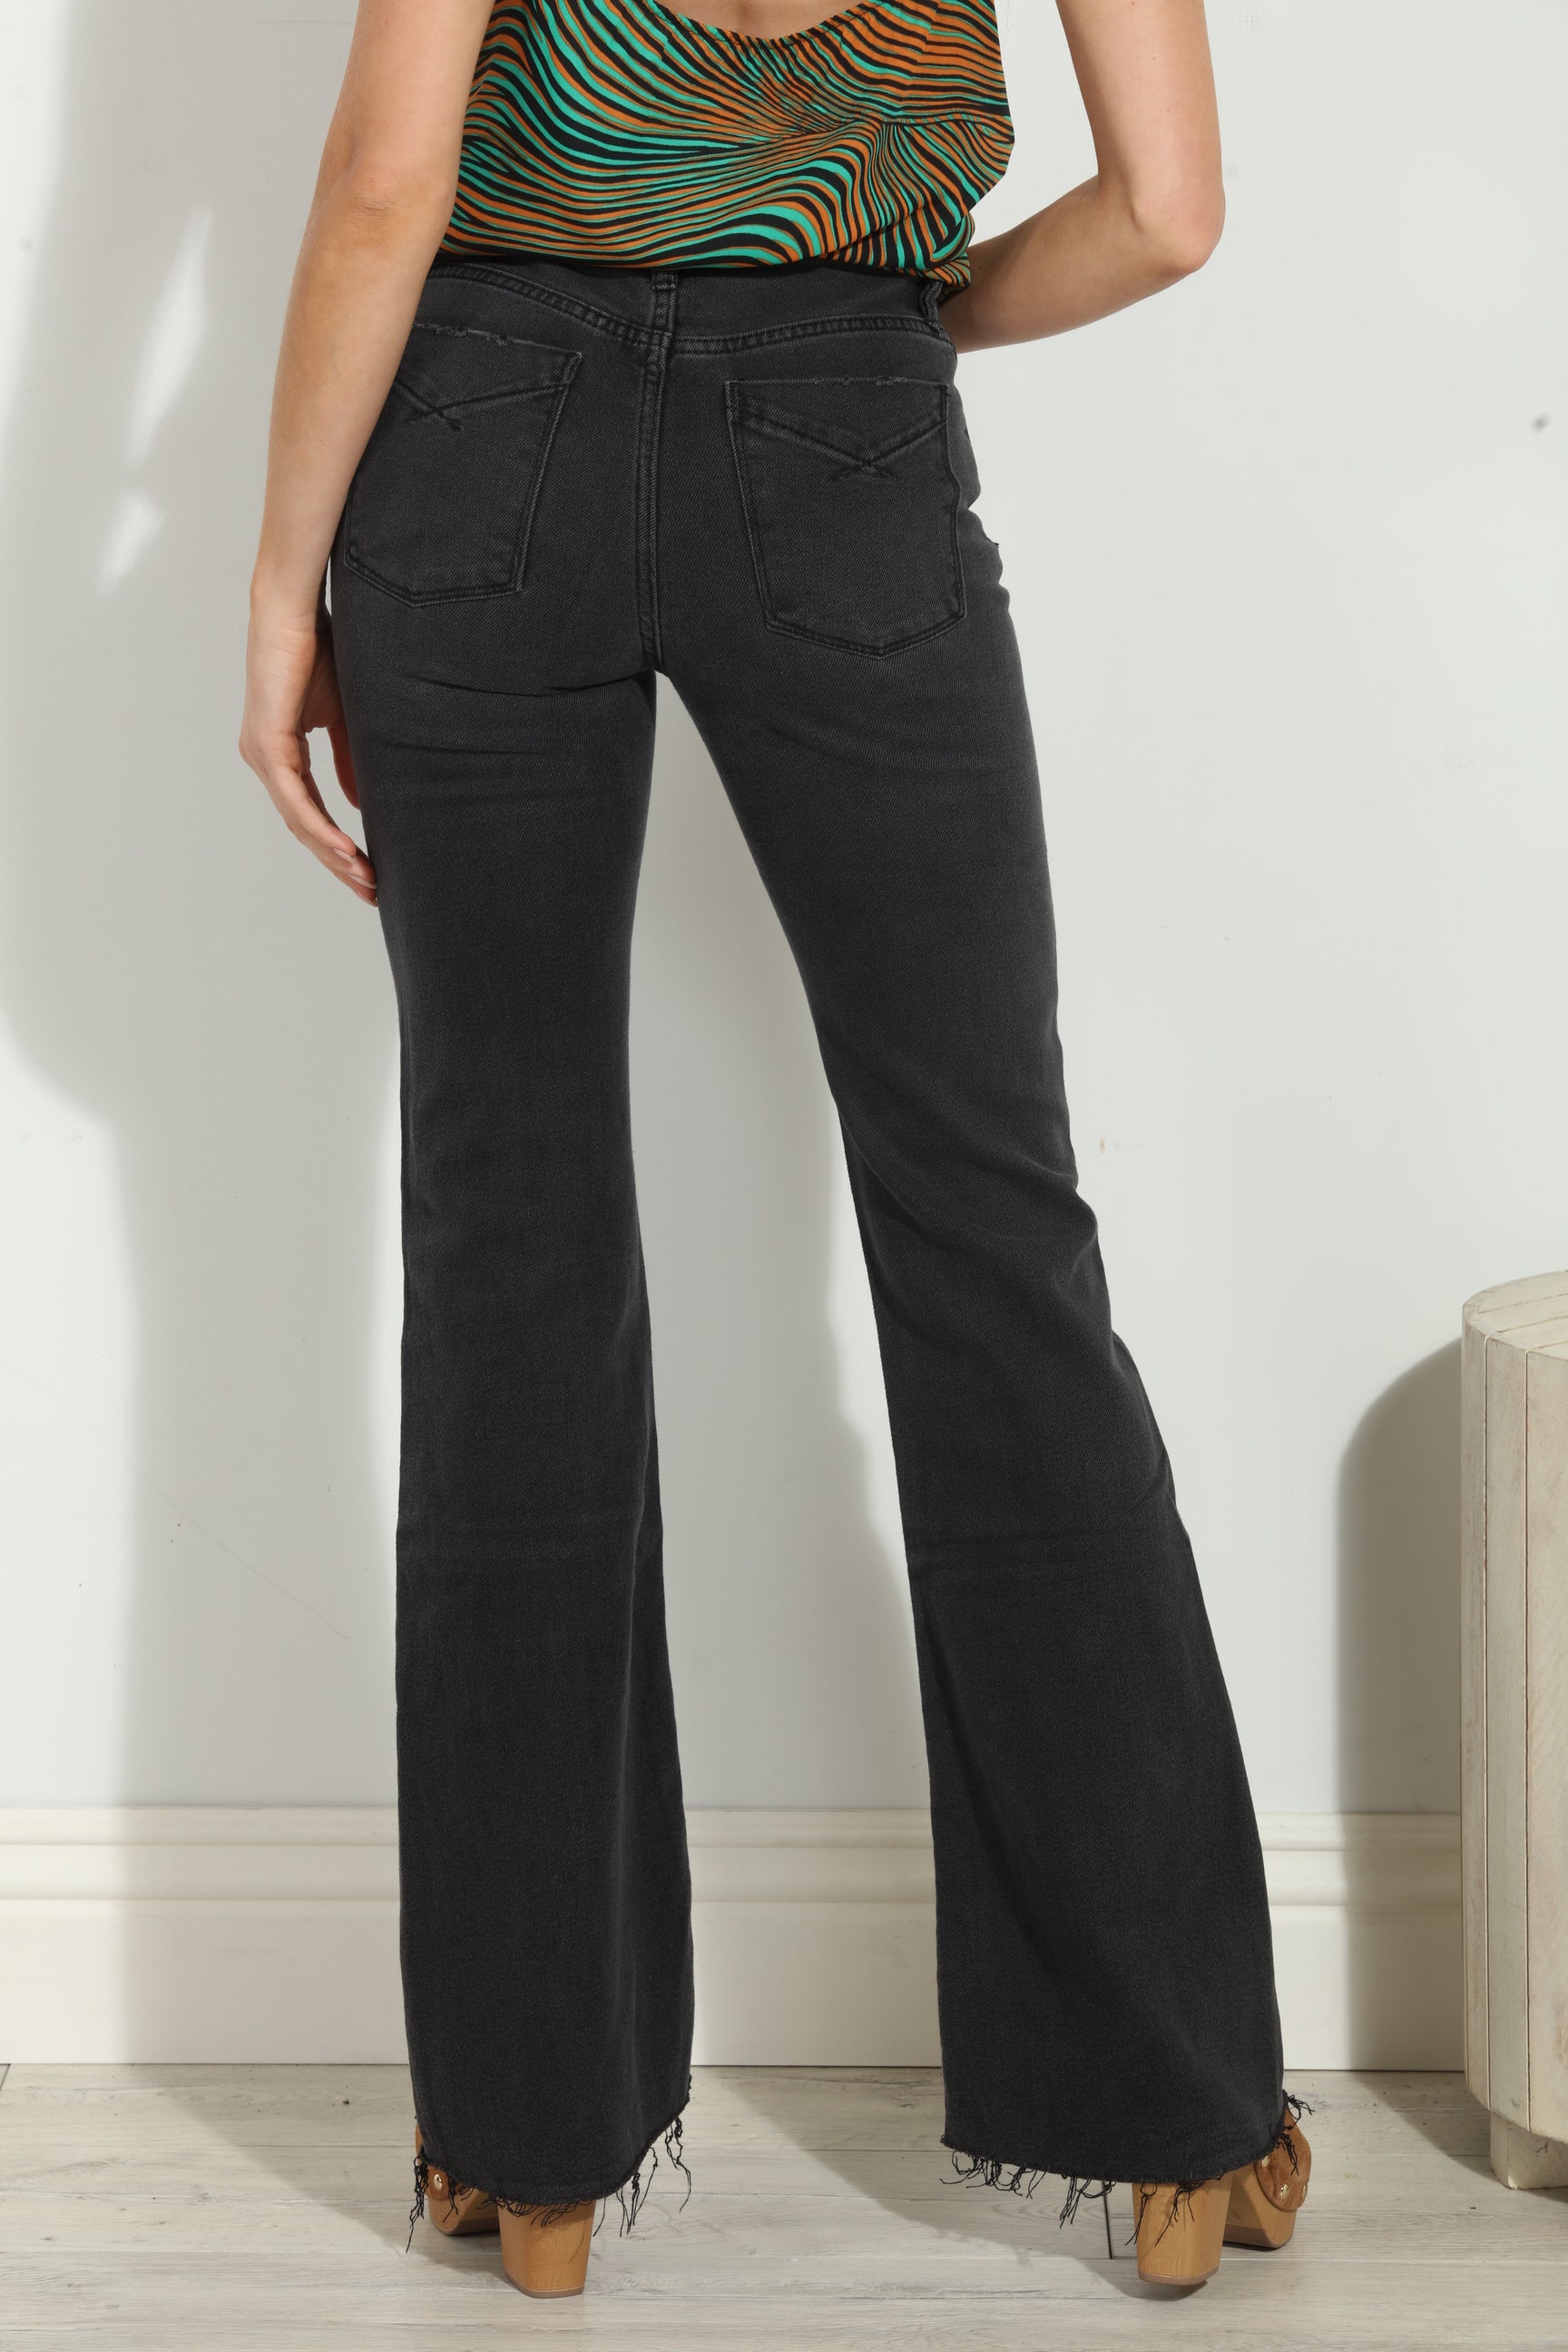 WonderFit Denim Jeans, Slimming Pants for Women